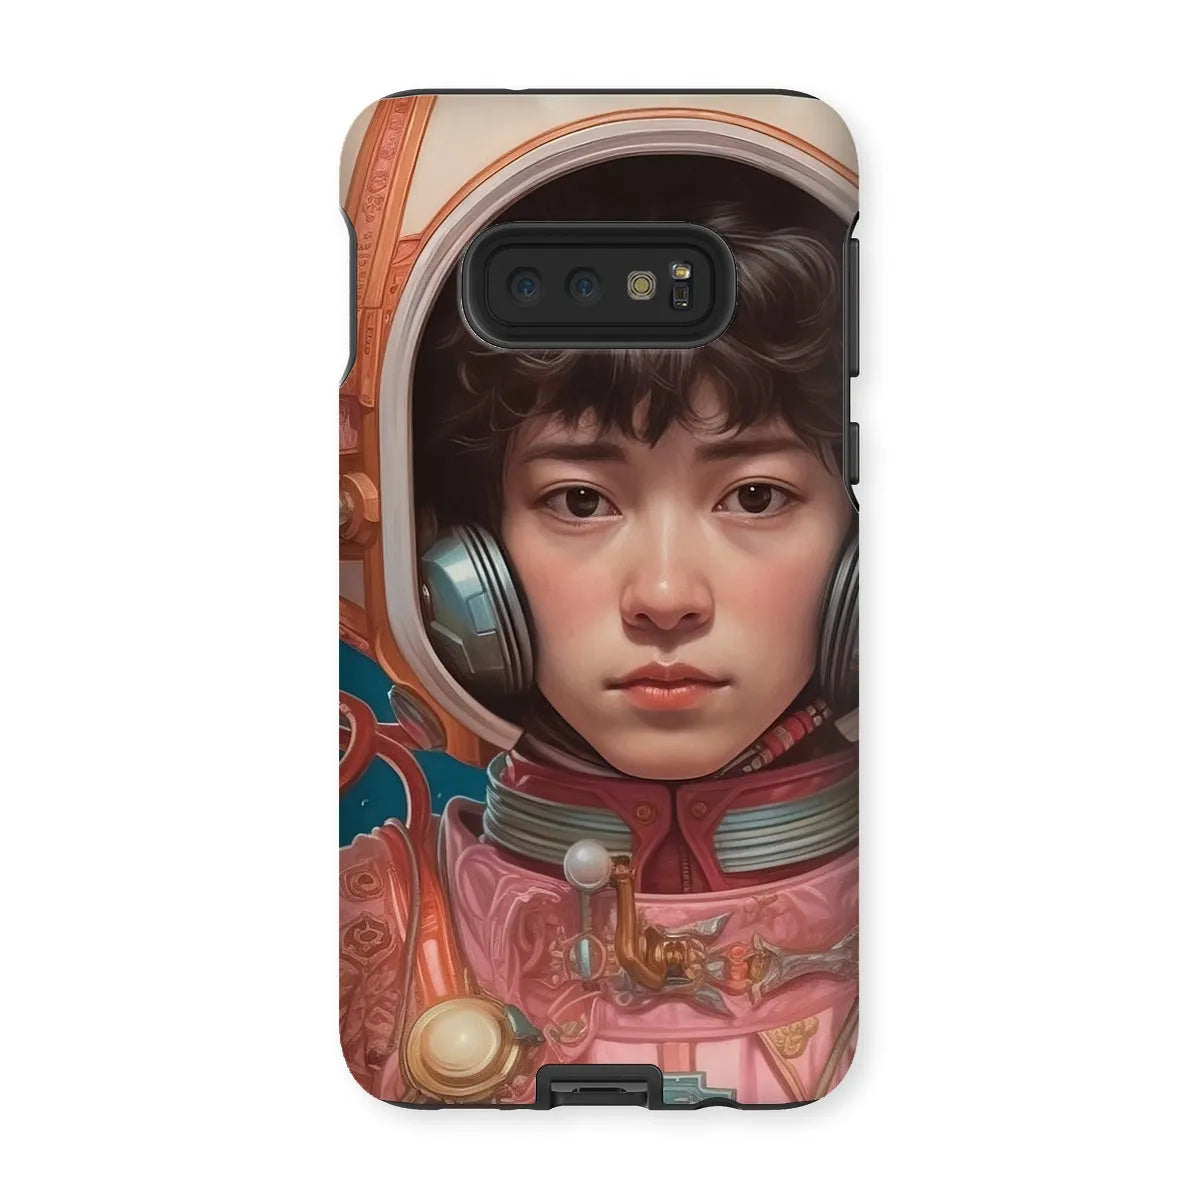 Kaito The Gay Astronaut - Lgbtq Art Phone Case - Samsung Galaxy S10e / Matte - Mobile Phone Cases - Aesthetic Art